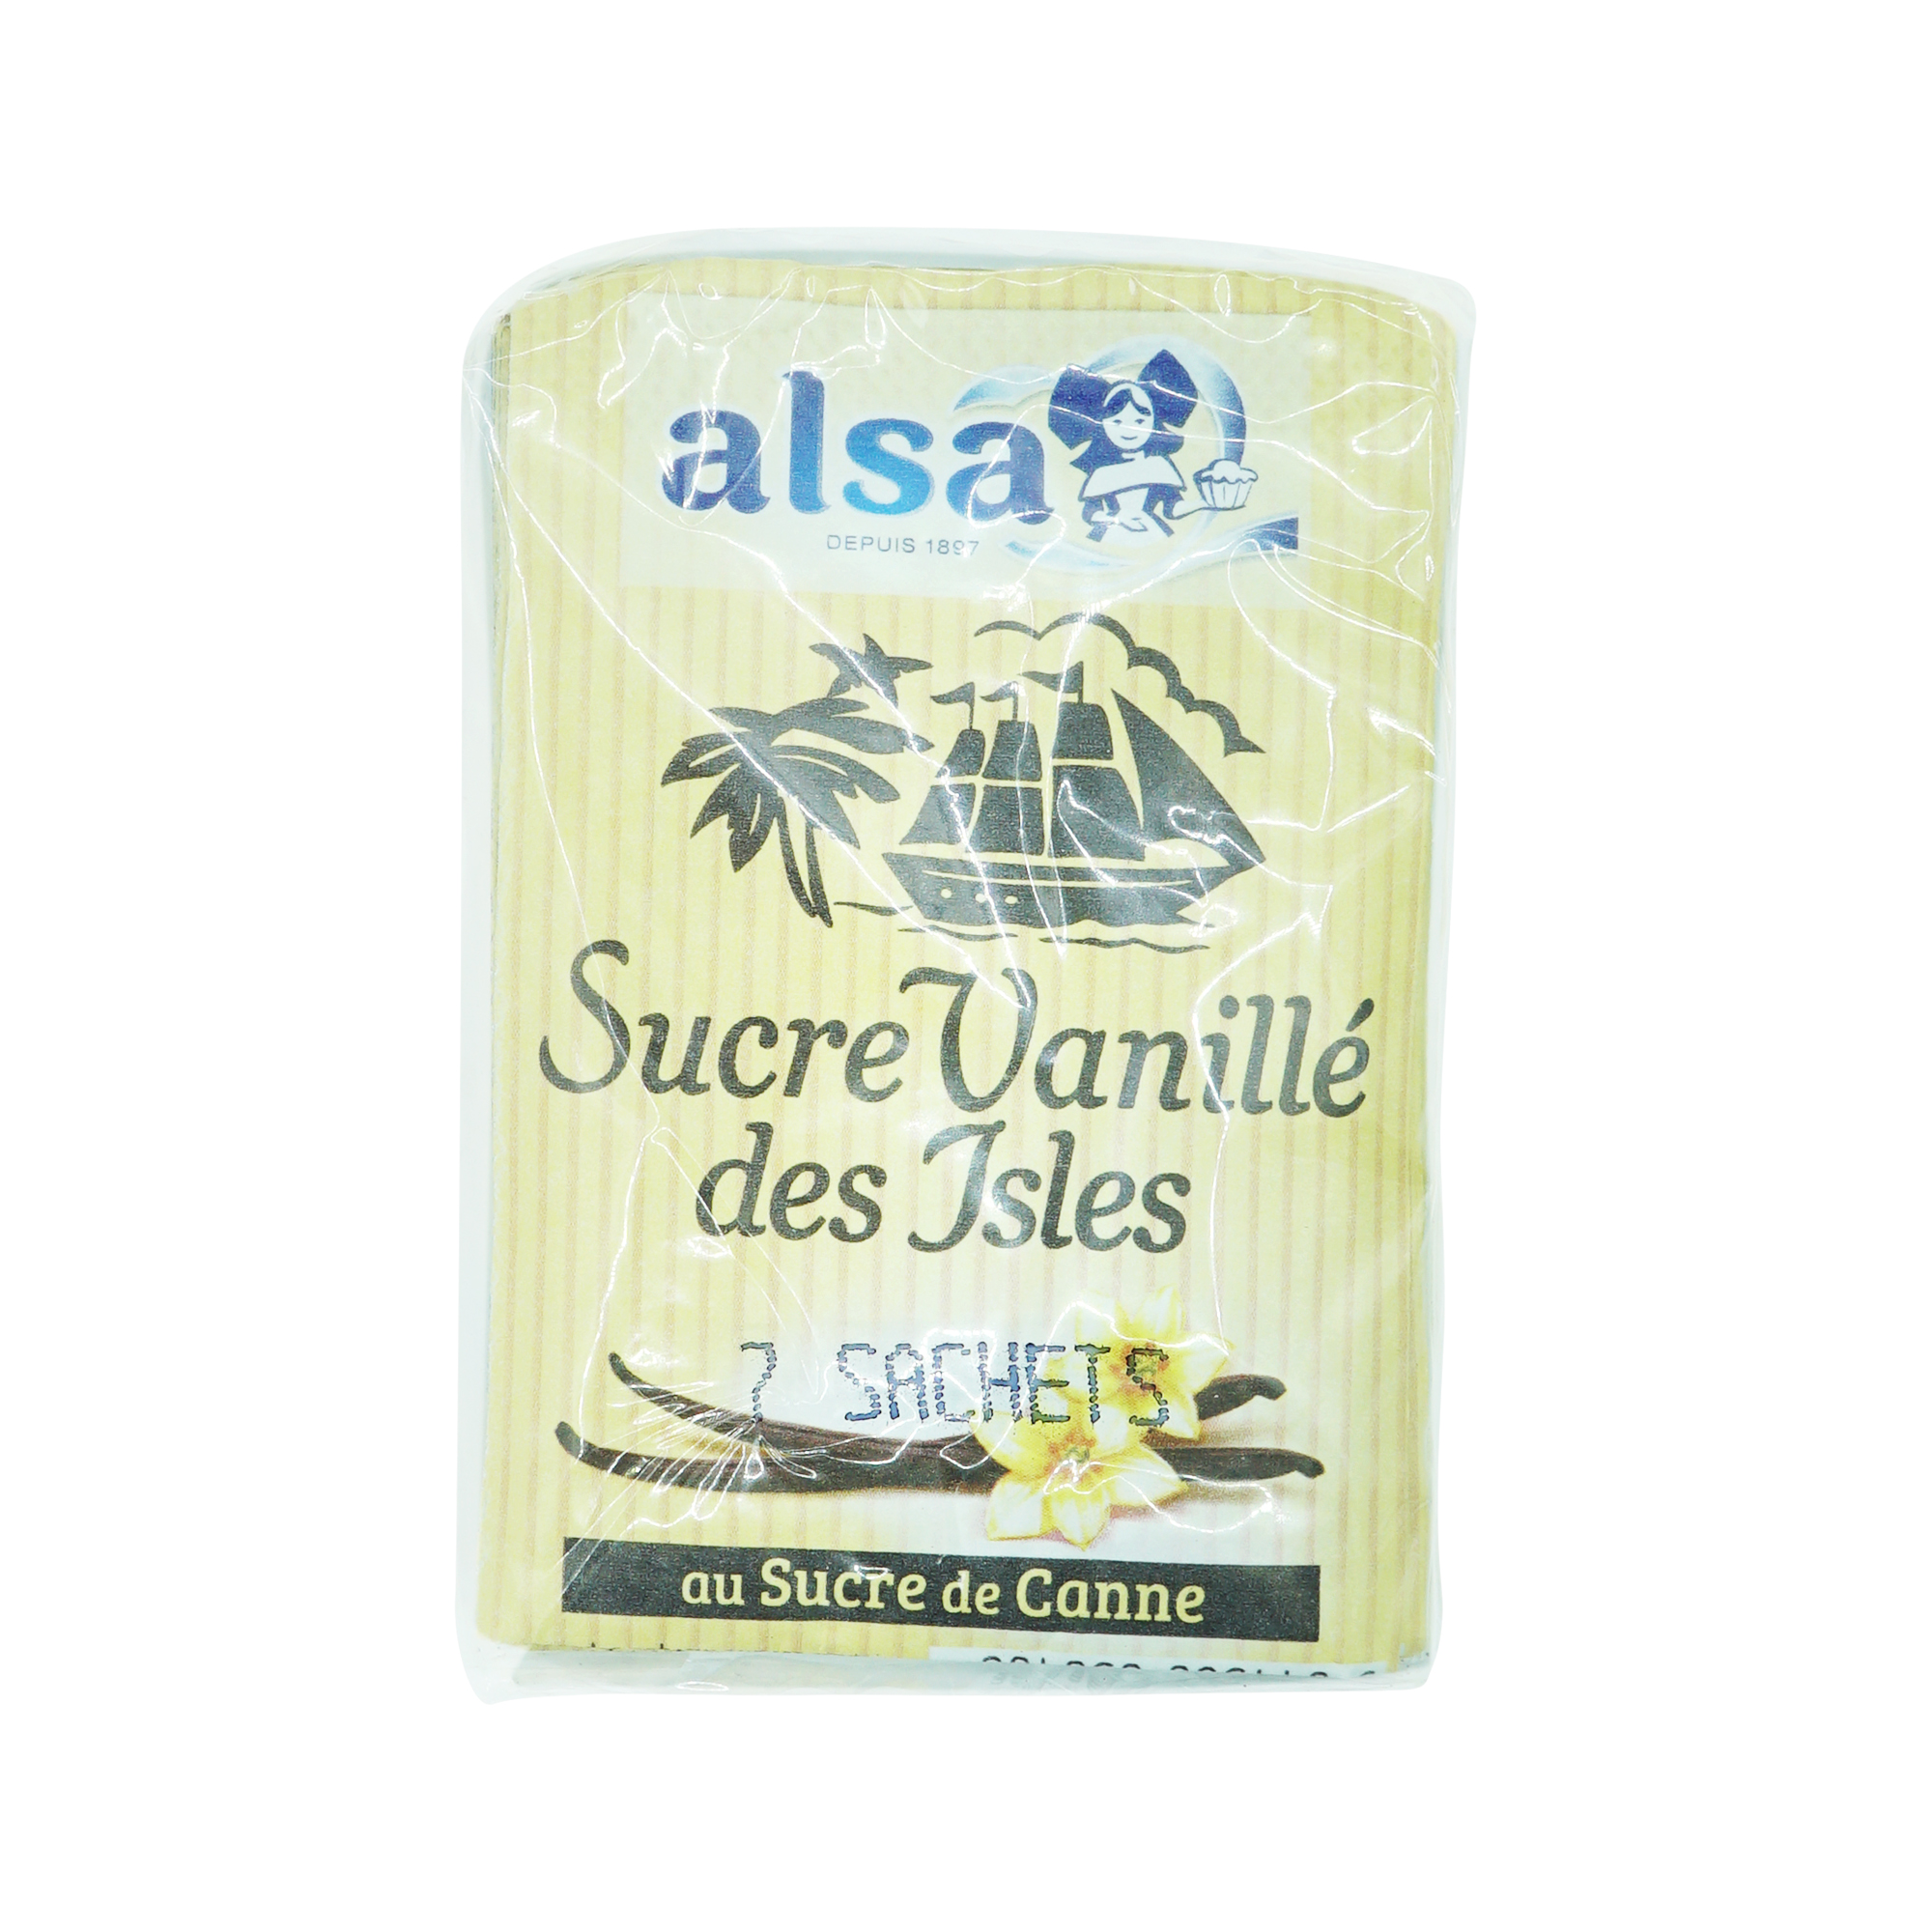 ALSA vanilla sugar